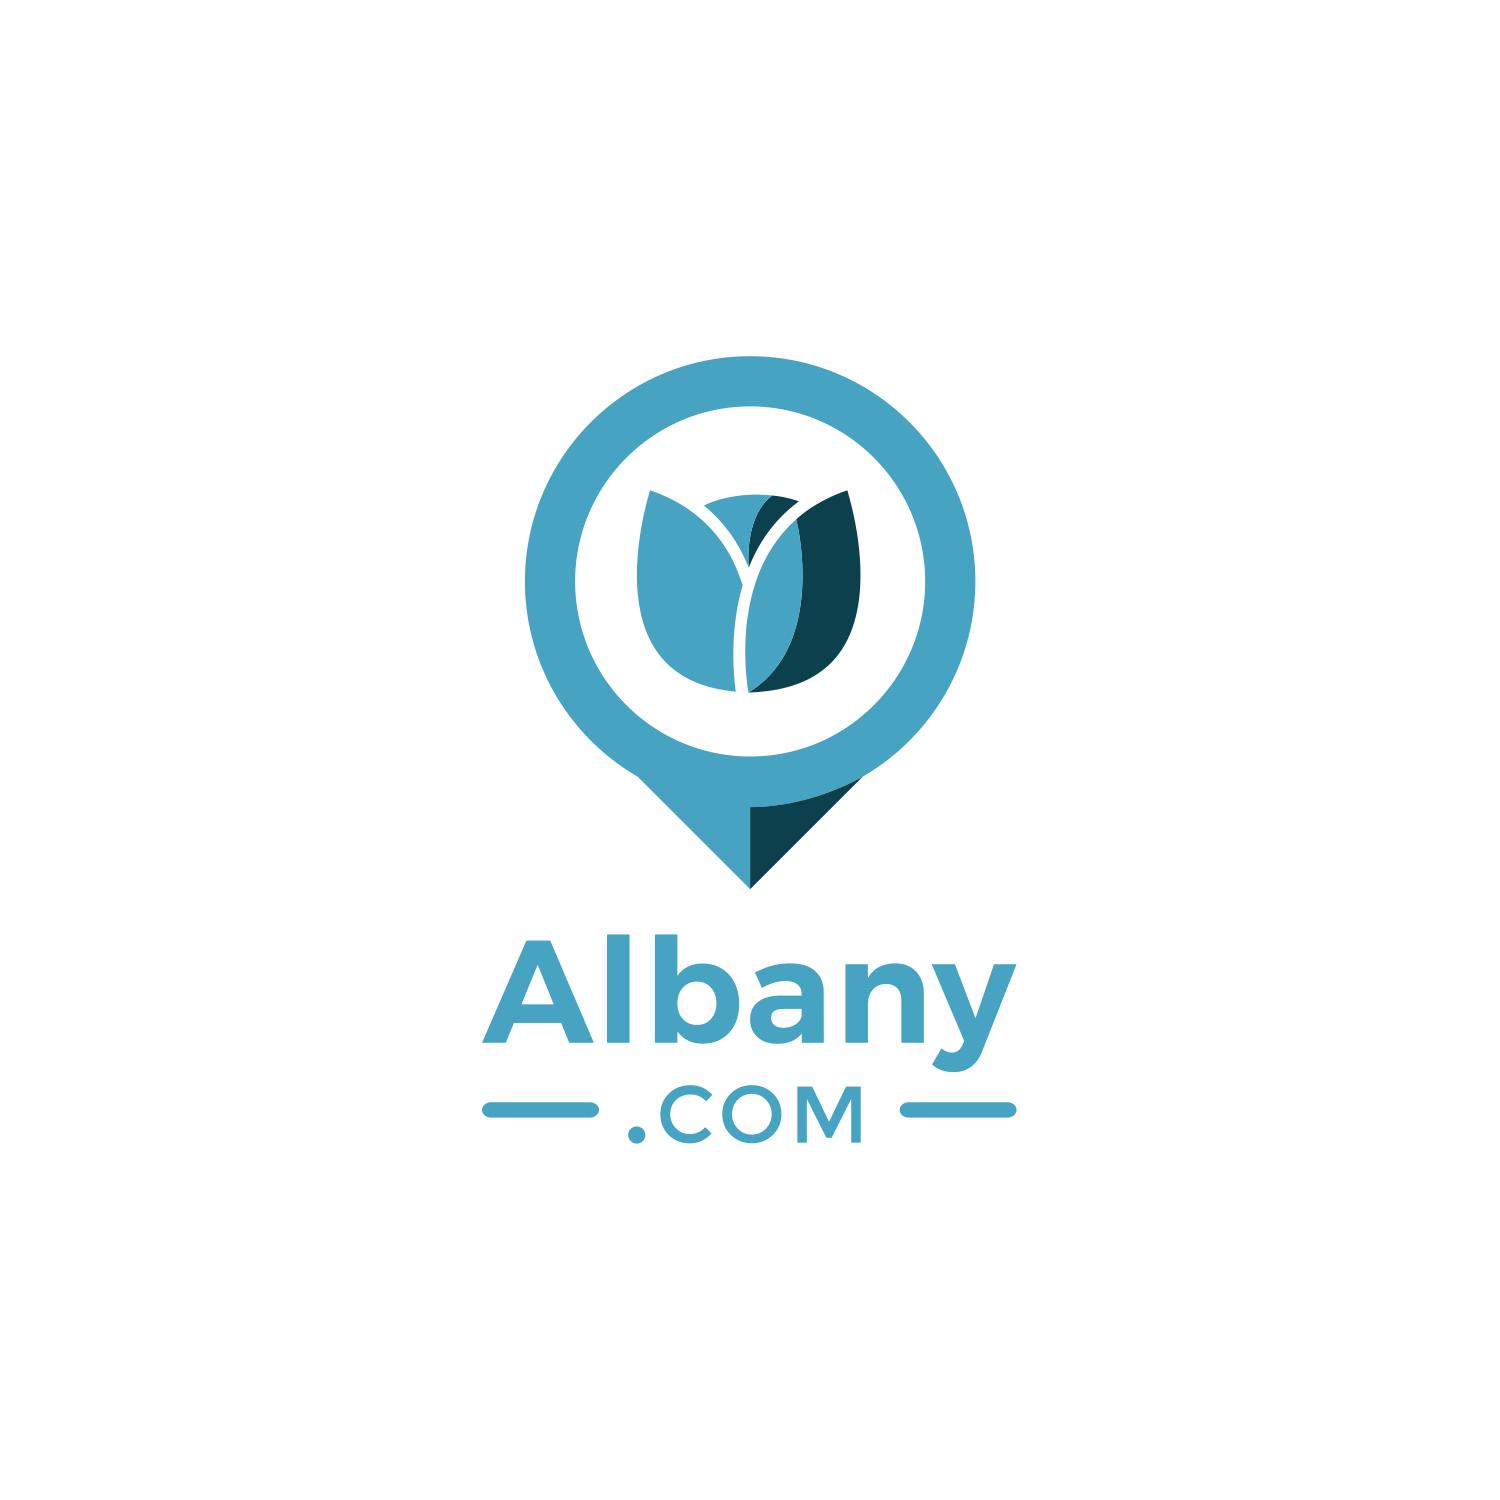 Albany Logo - Albany.com Logo - Lark Street (BID) Business Improvement District ...